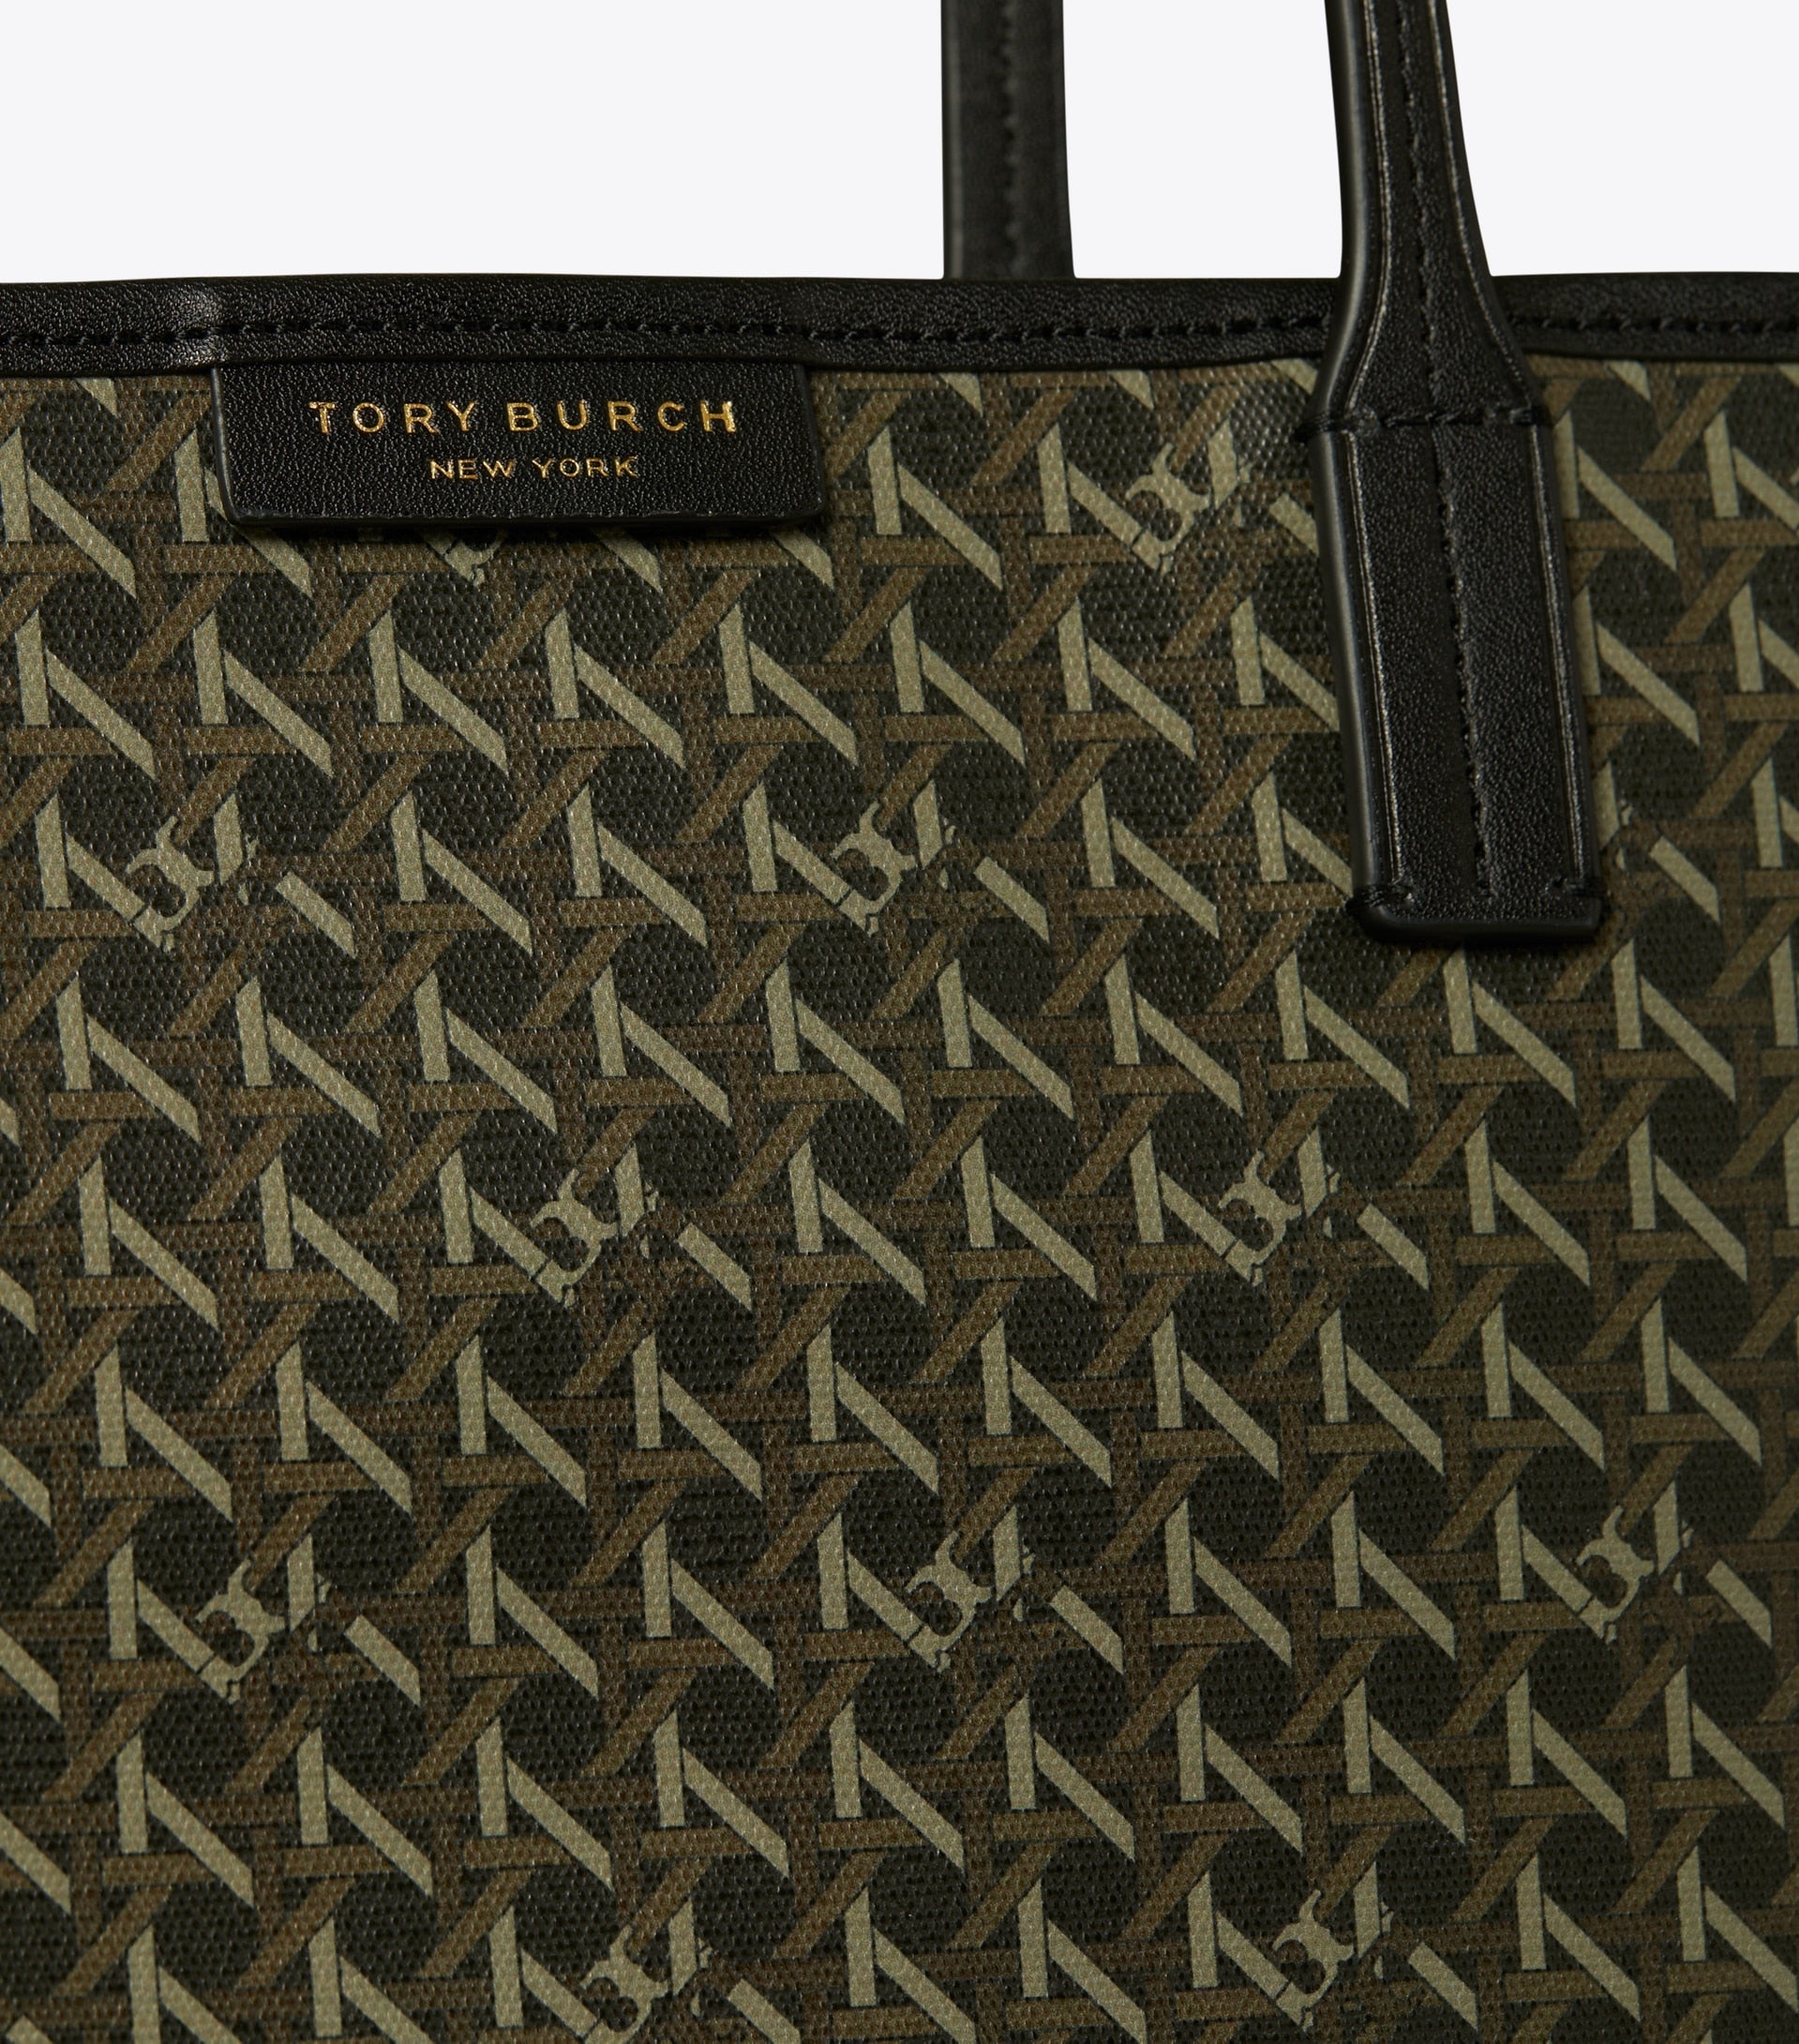 Buy Tory Burch Ever Ready Zip Tote Bag For Women - Black in Pakistan